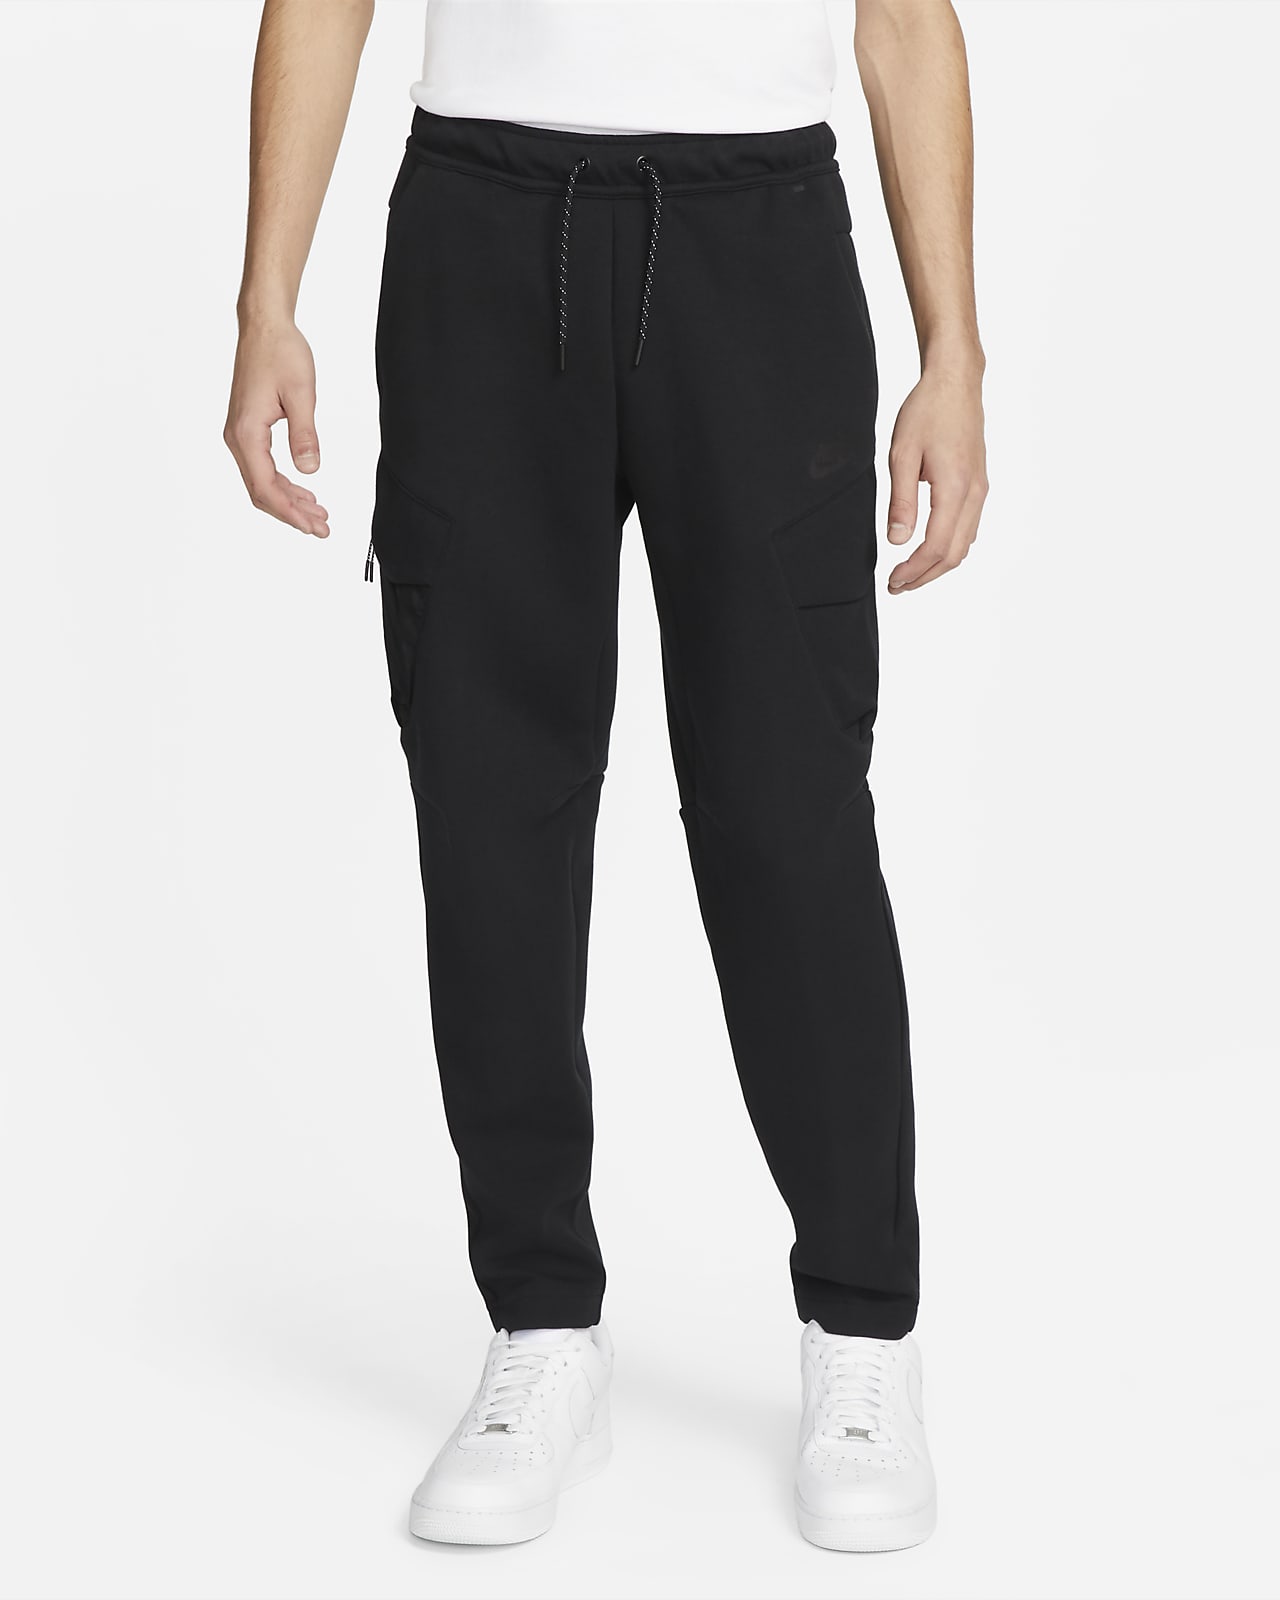 Grey Nike Tech Fleece Pants Men's Size Medium 